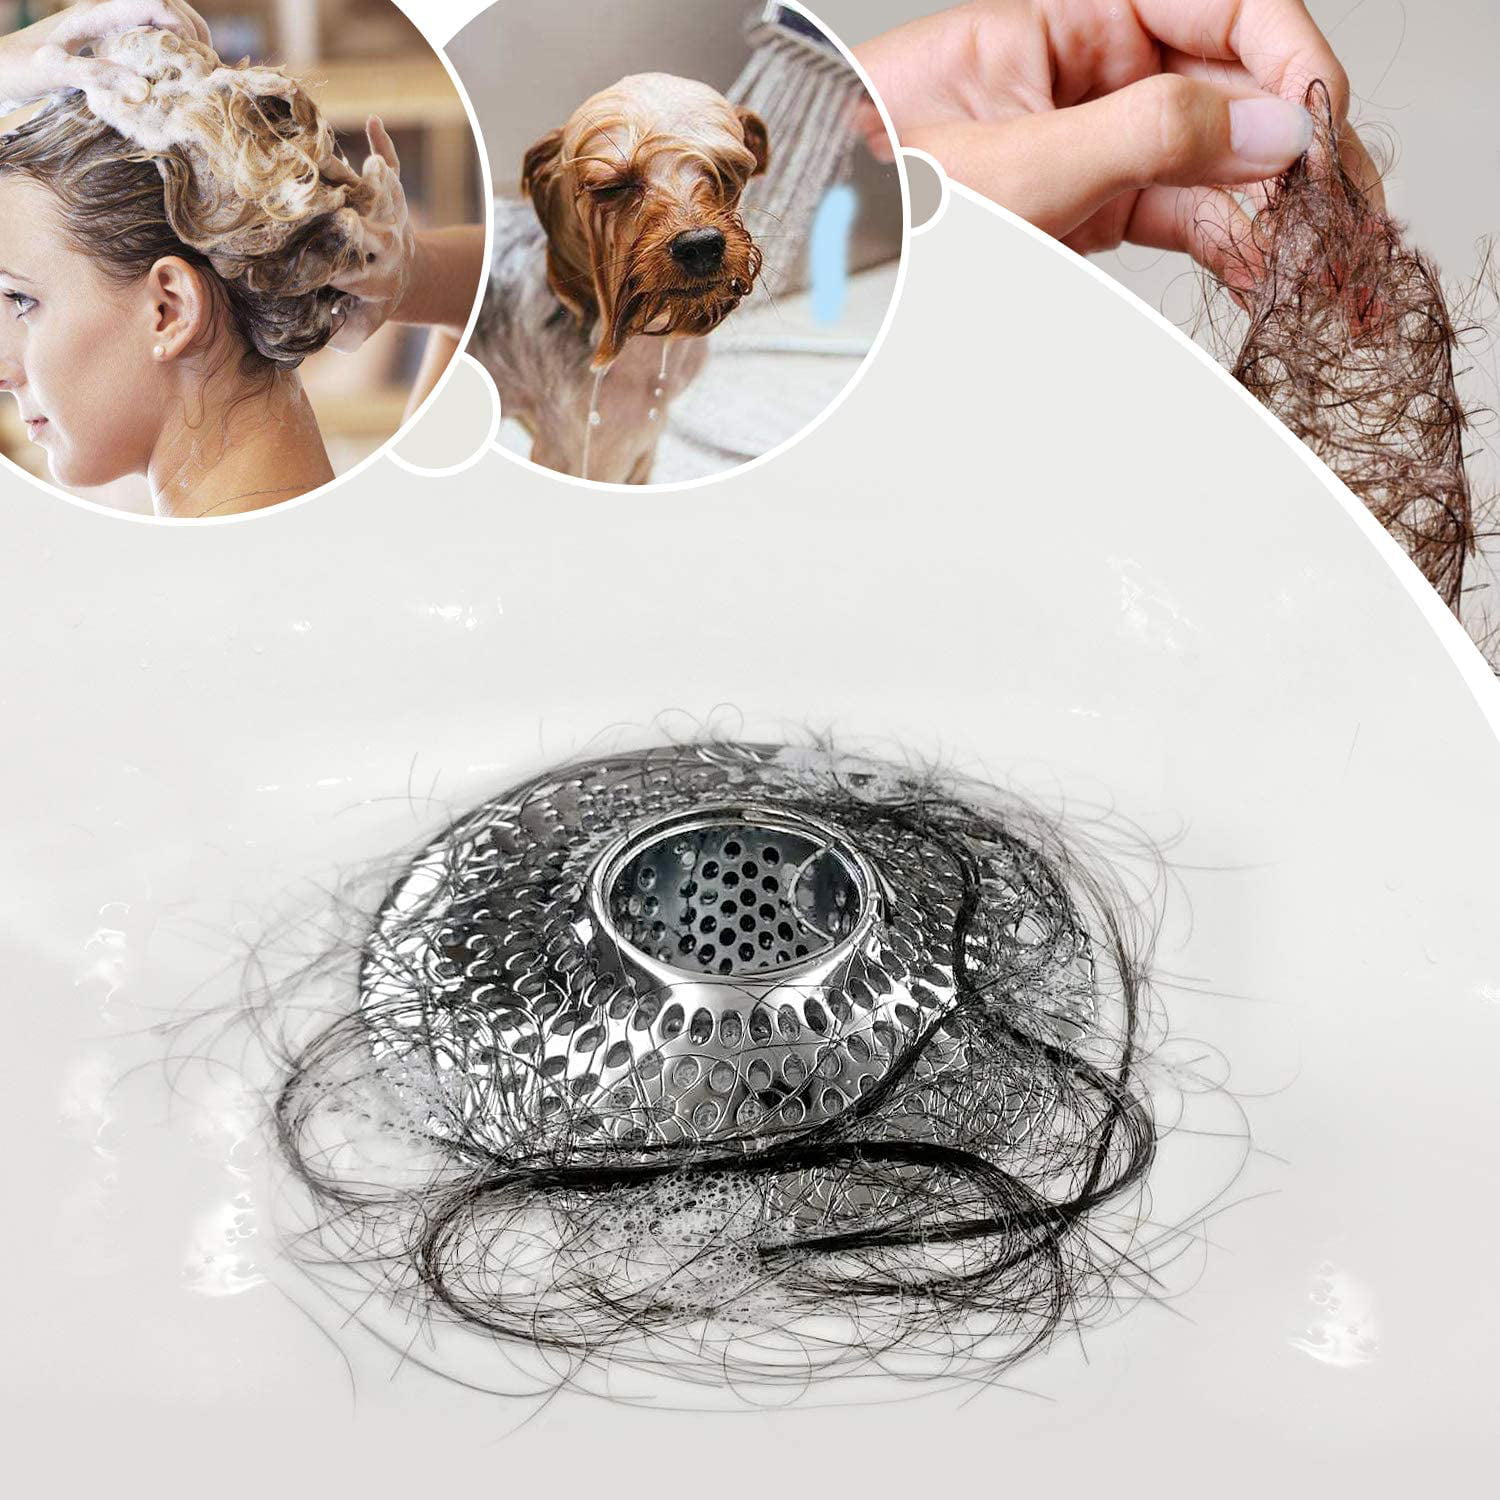 Lekeye Drain Hair Catcher/Bathtub Shower Drain Hair Trap/Strainer Stainless Steel Drain Protector(Patented Product), Silver